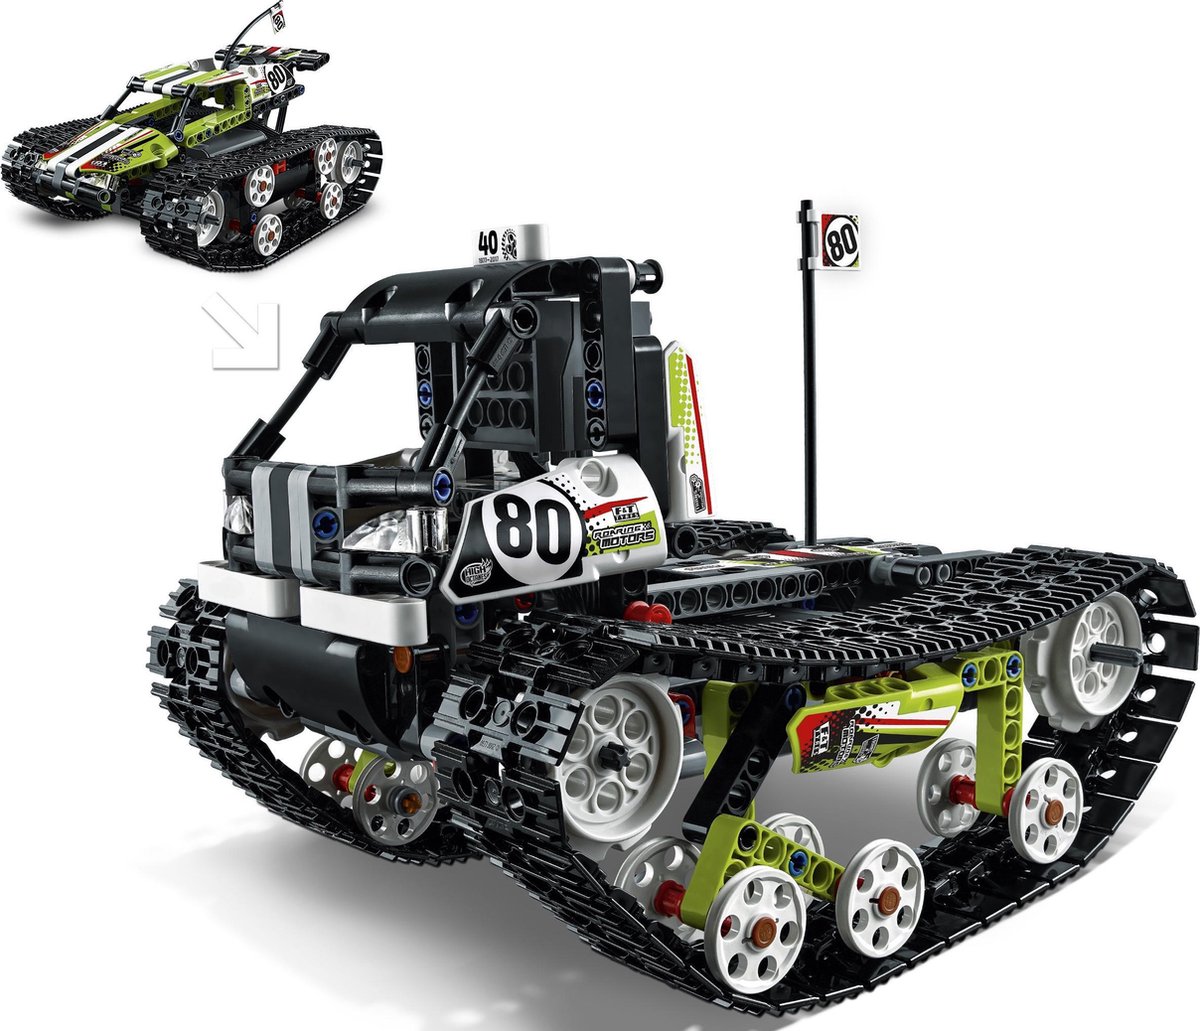 LEGO Technic RC Rupsbandracer - 42065 | bol.com